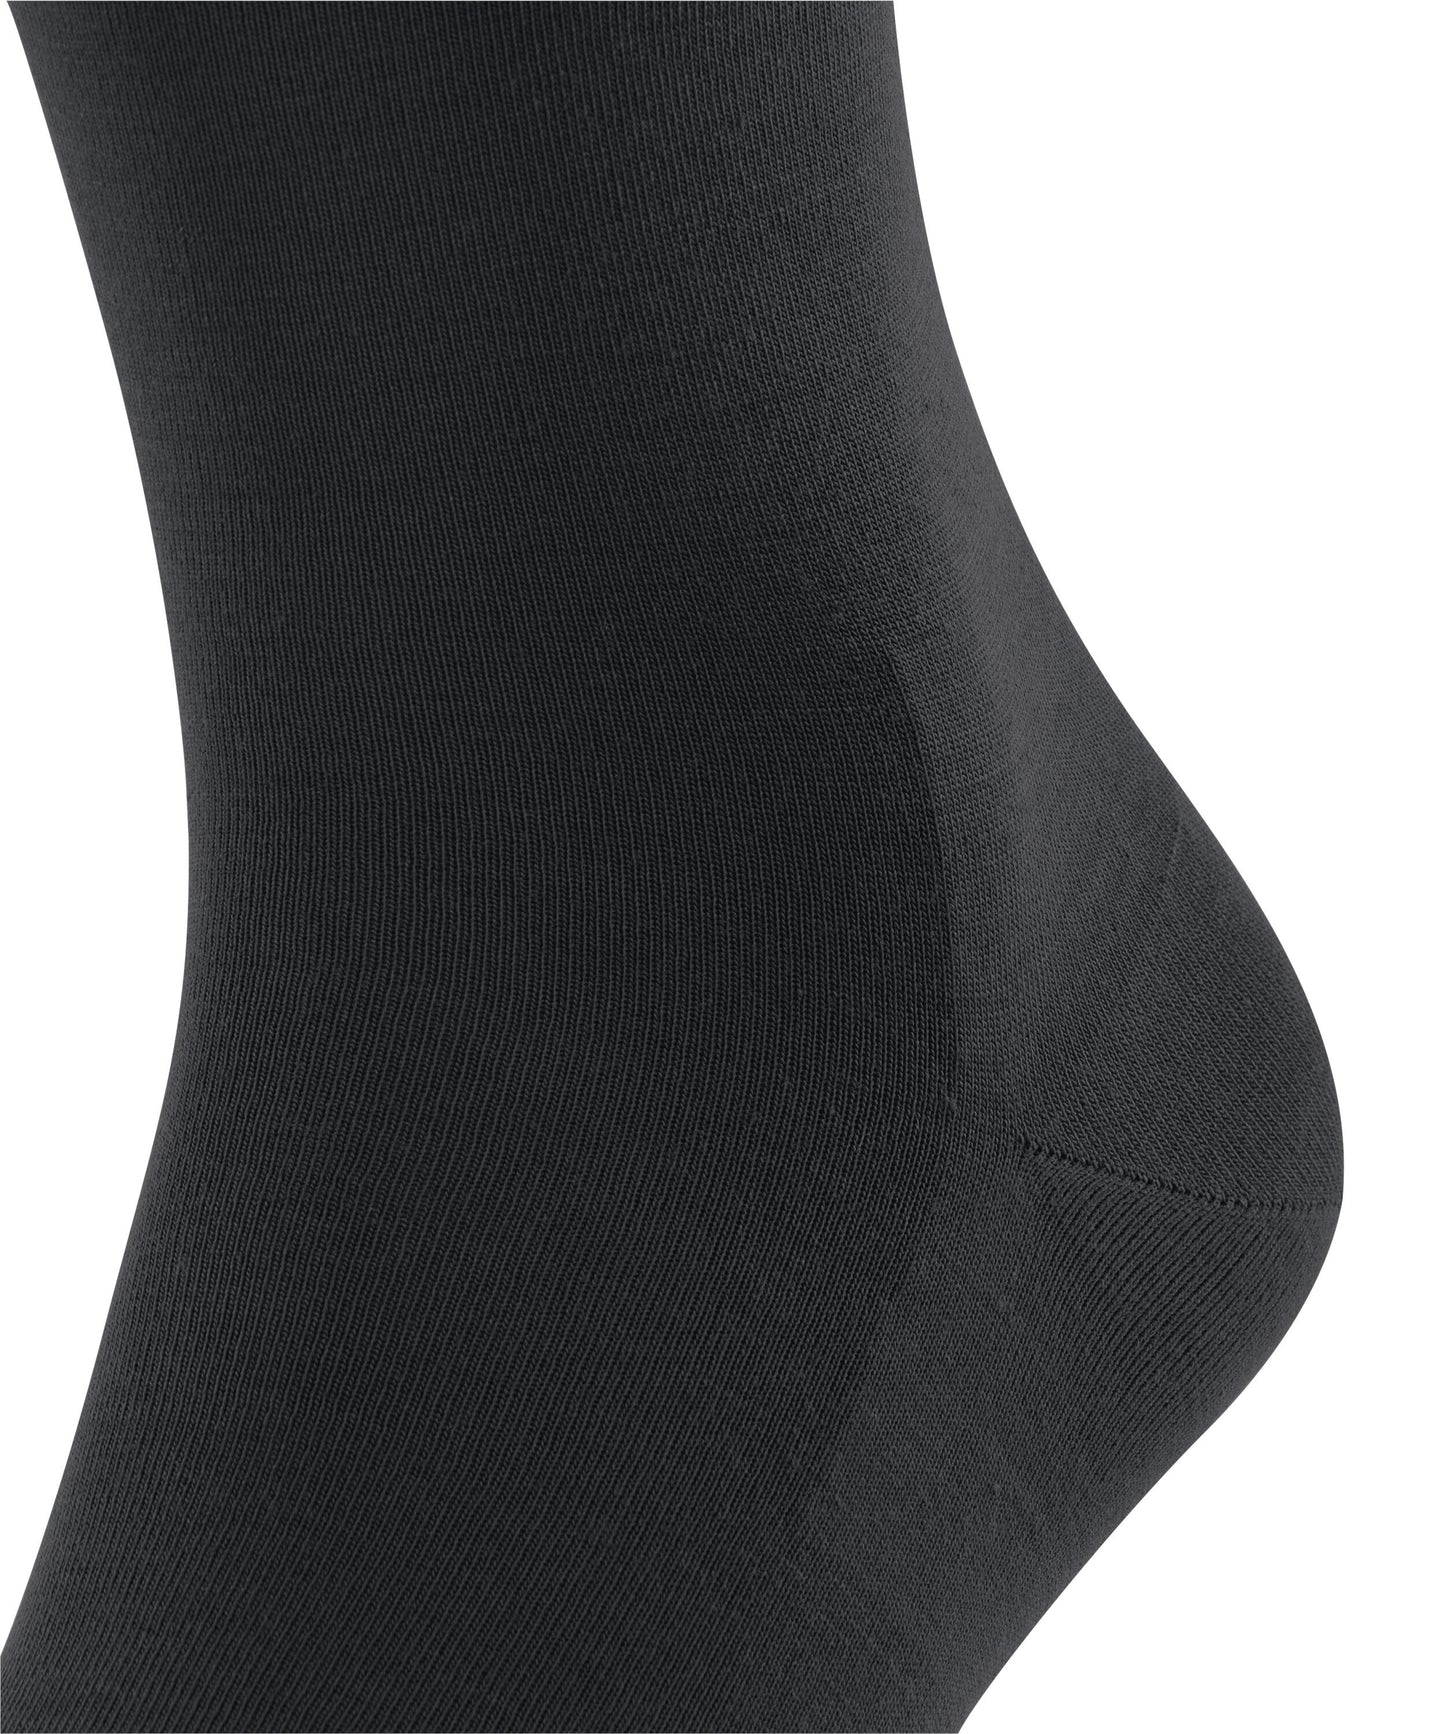 Socken ClimaWool (Black)